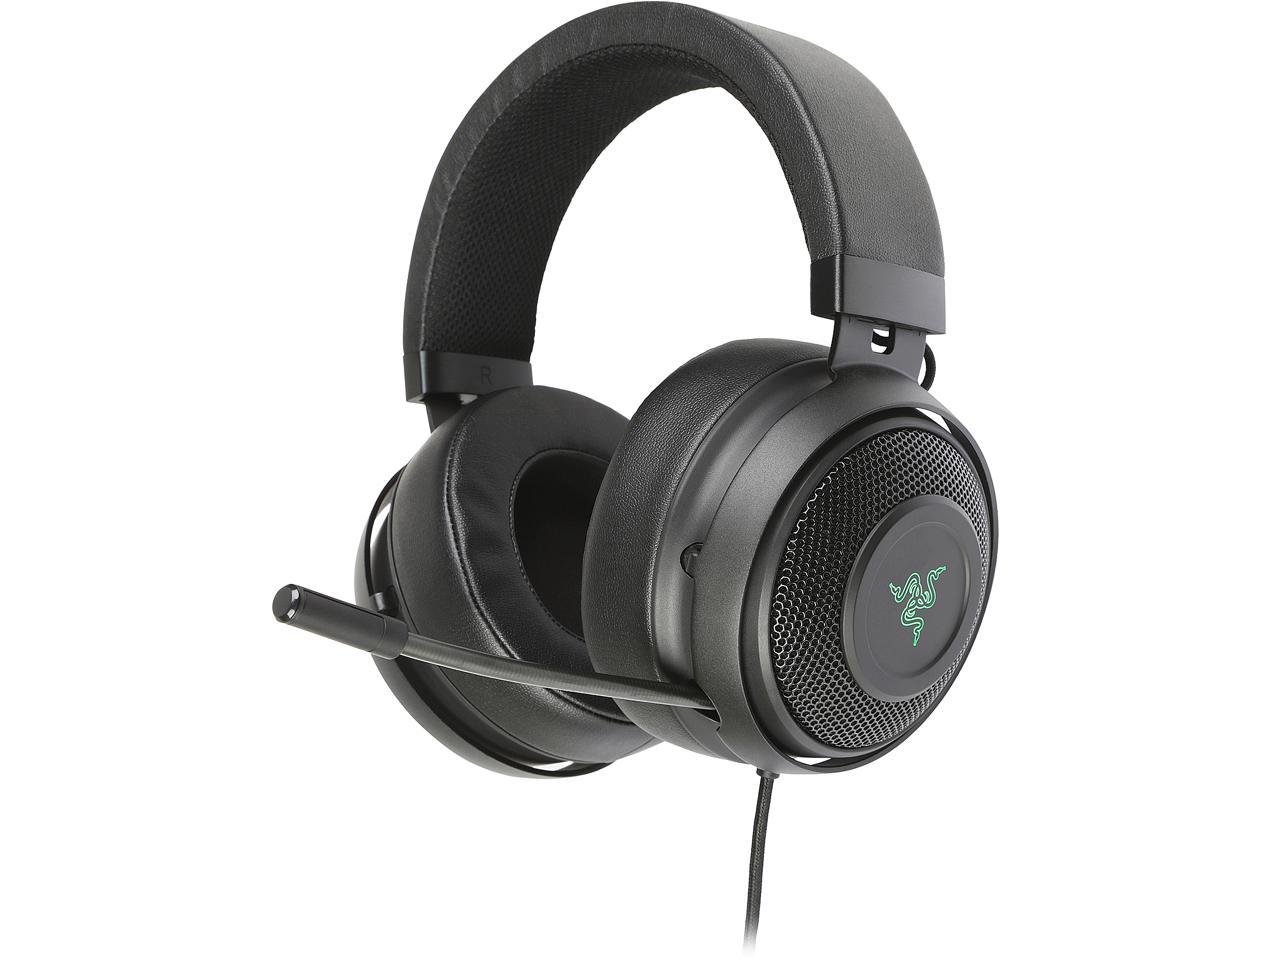 Razer Kraken 7 1 Chroma V2 Usb Gaming Headset 7 1 Surround Sound With Retractable Digital Microphone And Chroma Lighting Newegg Com